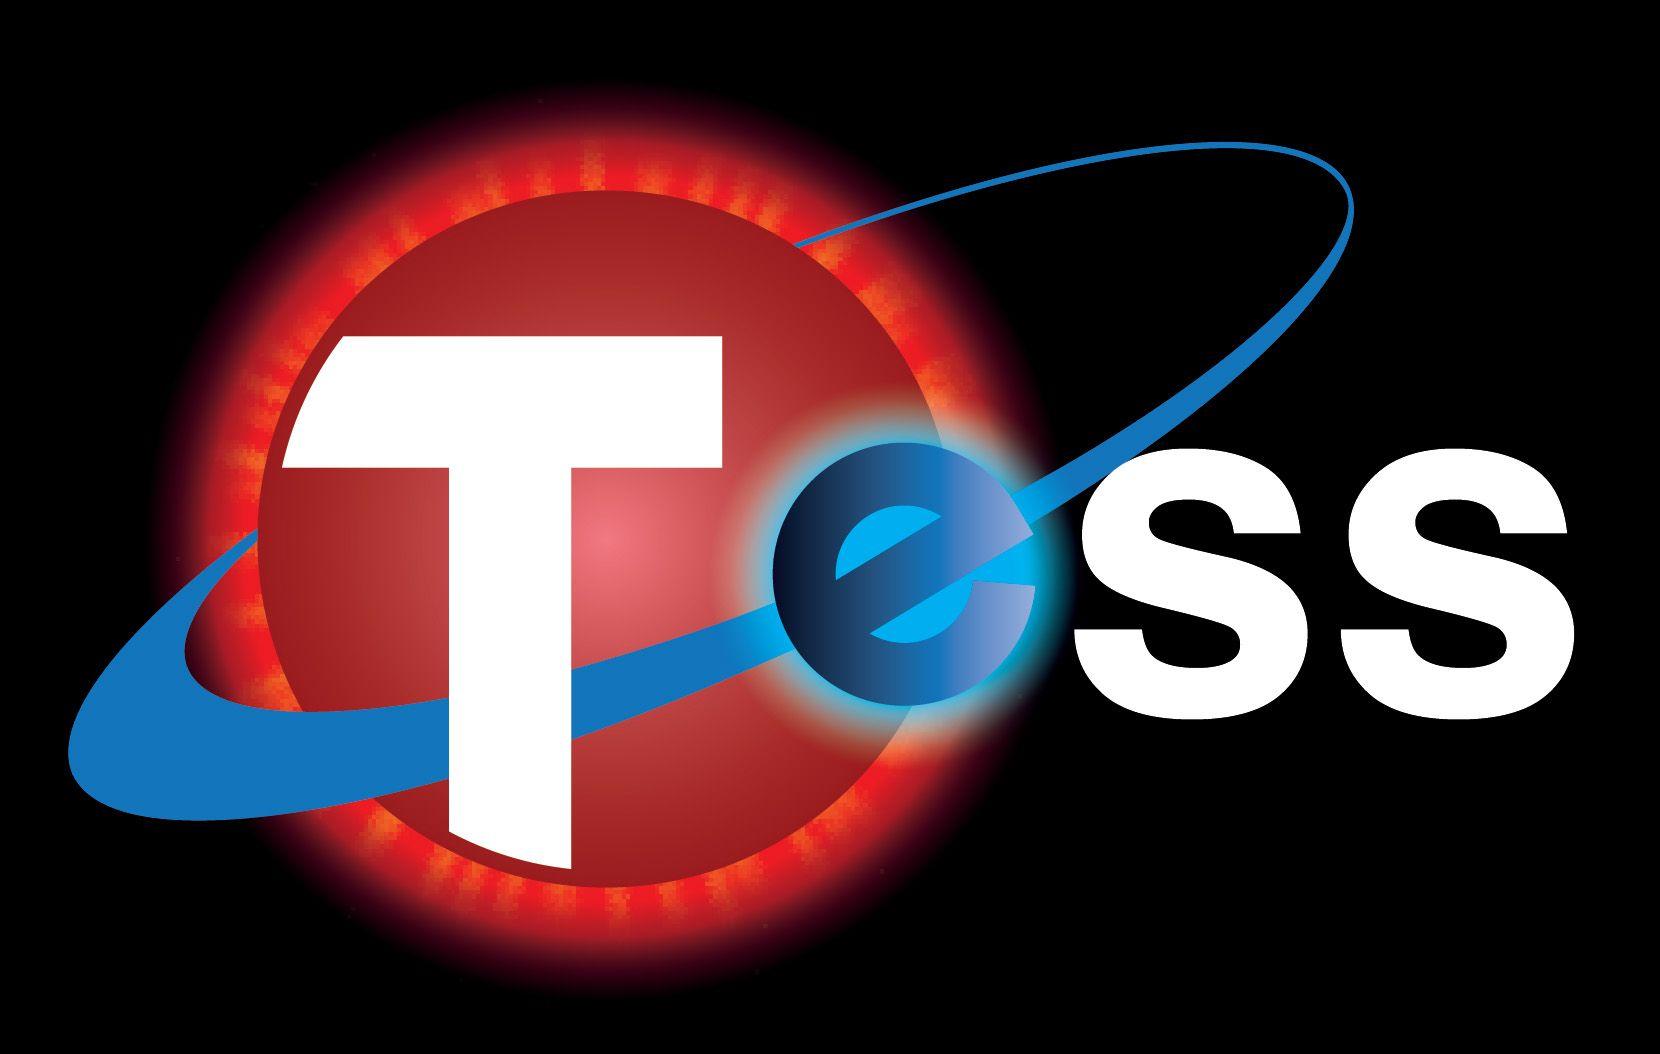 2014 NASA Logo - File:TESS logo (black bg).jpg - Wikimedia Commons